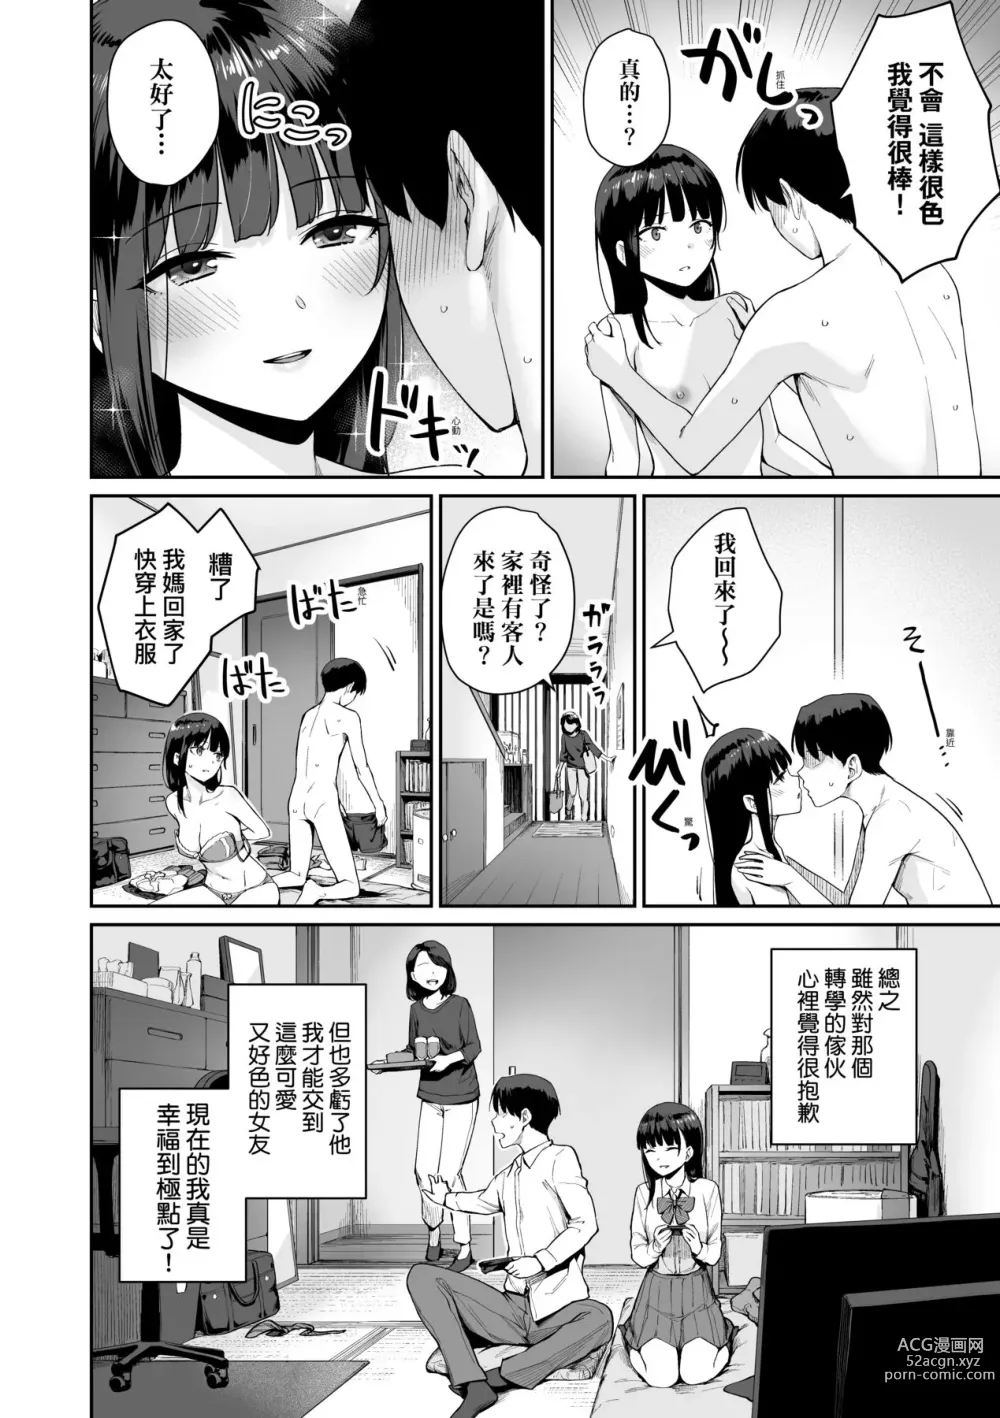 Page 209 of manga 家裡兄弟唯獨只有我沒能SEX